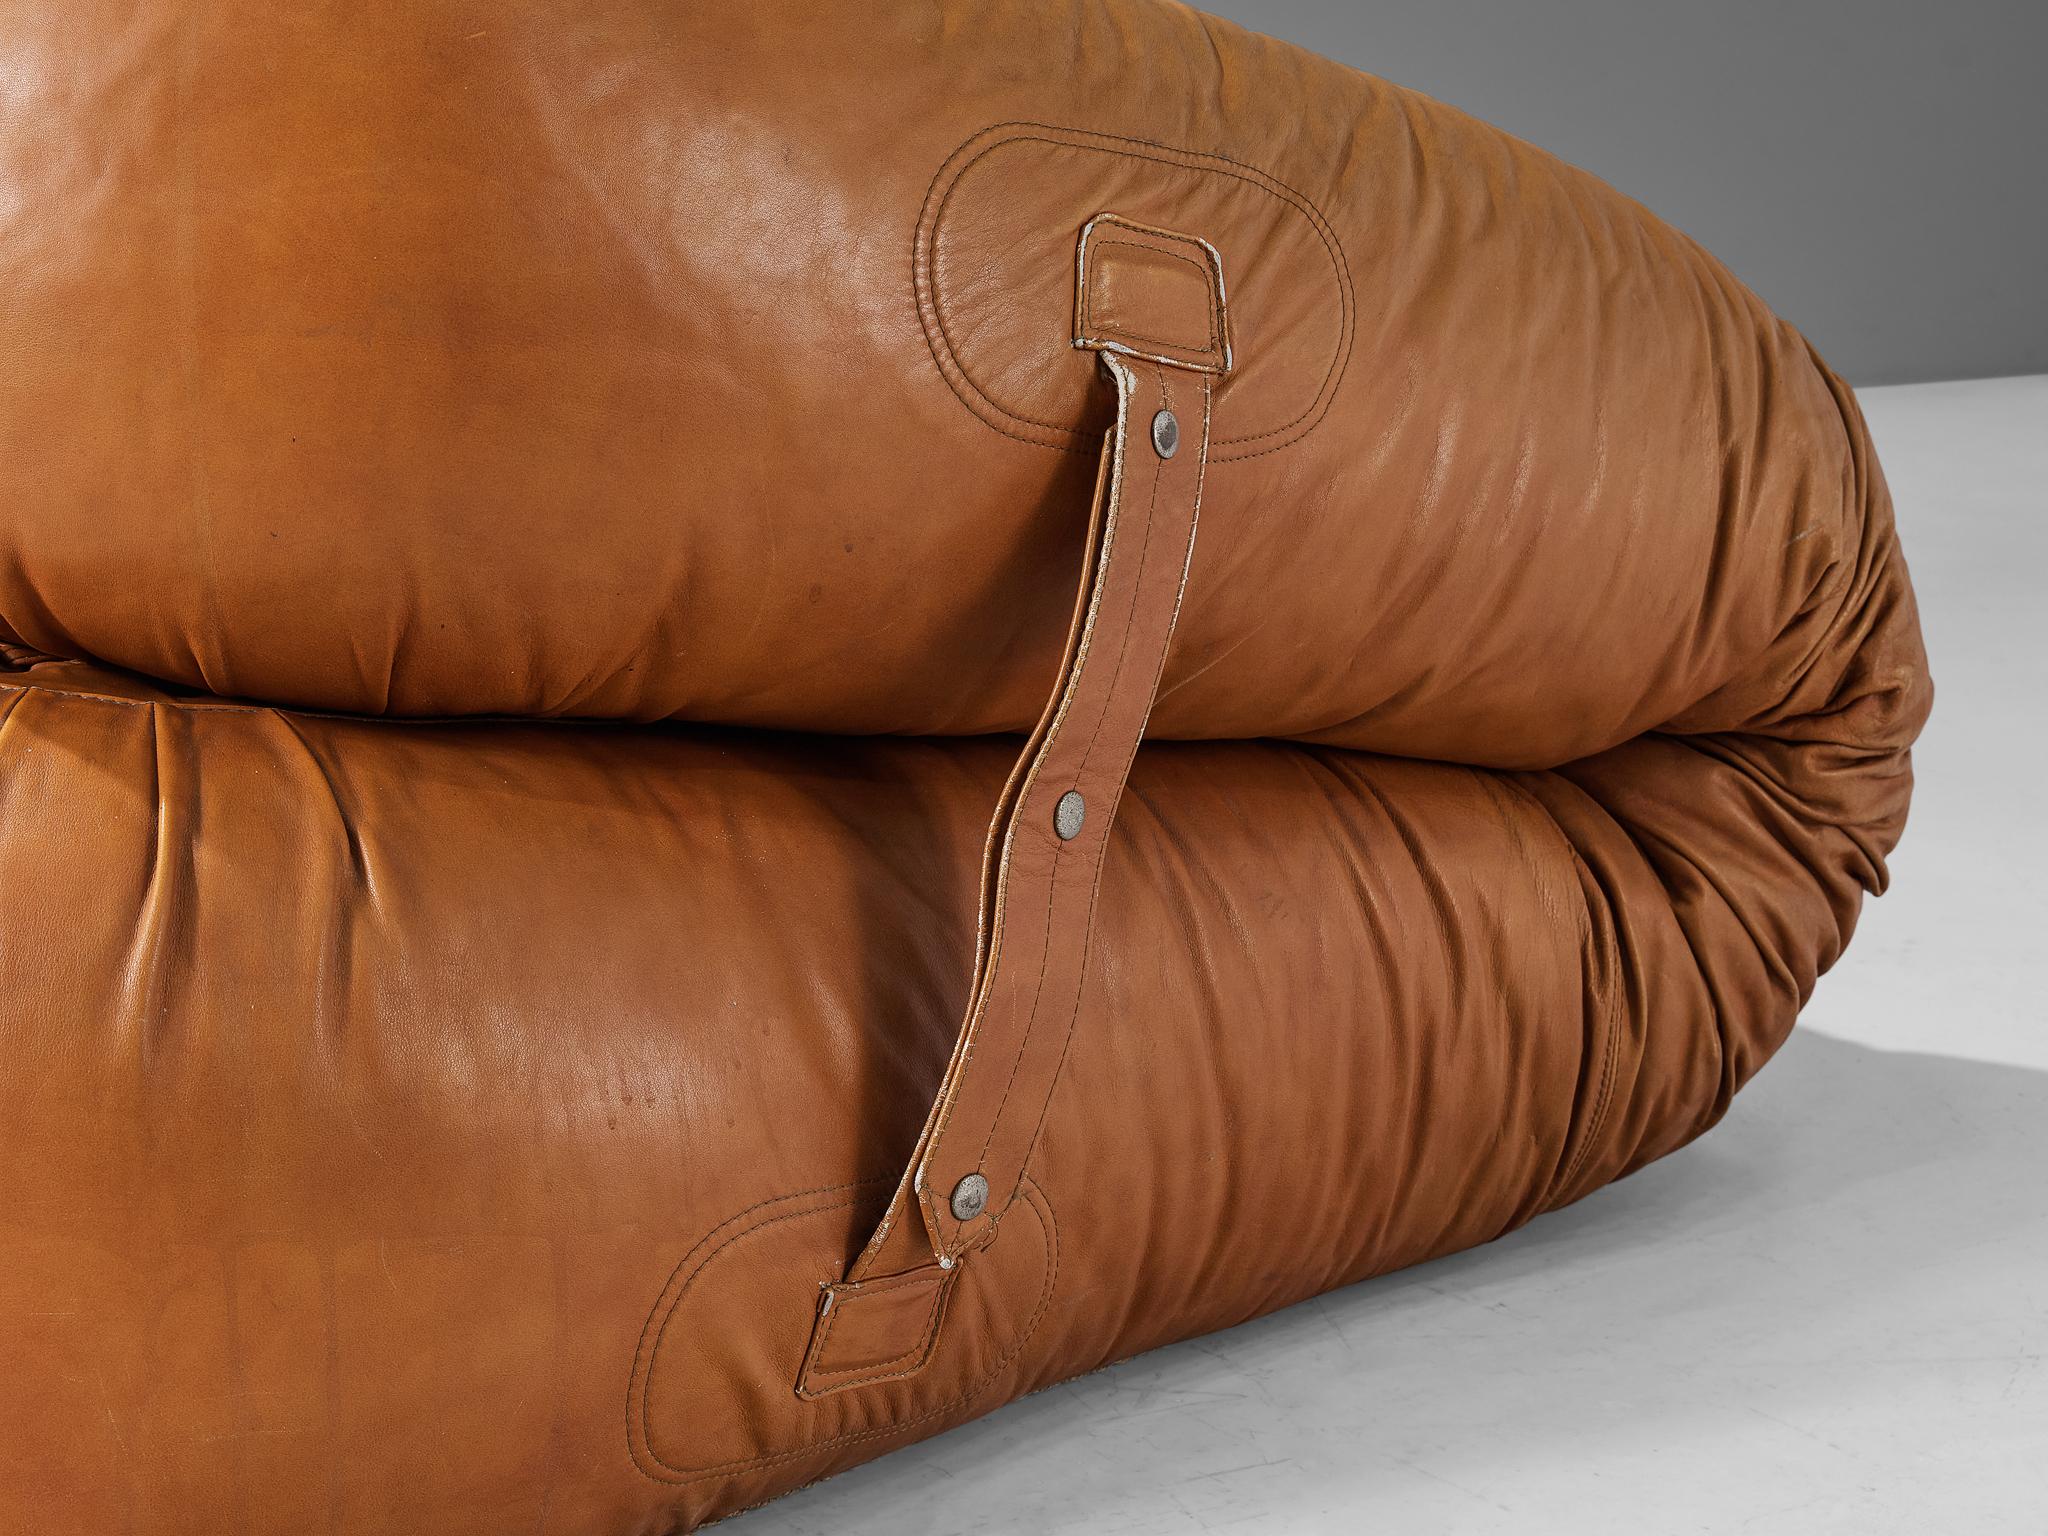 Alessandro Becchi for Giovannetti Collezioni 'Anfibio' Lounge Chairs in Leather 4